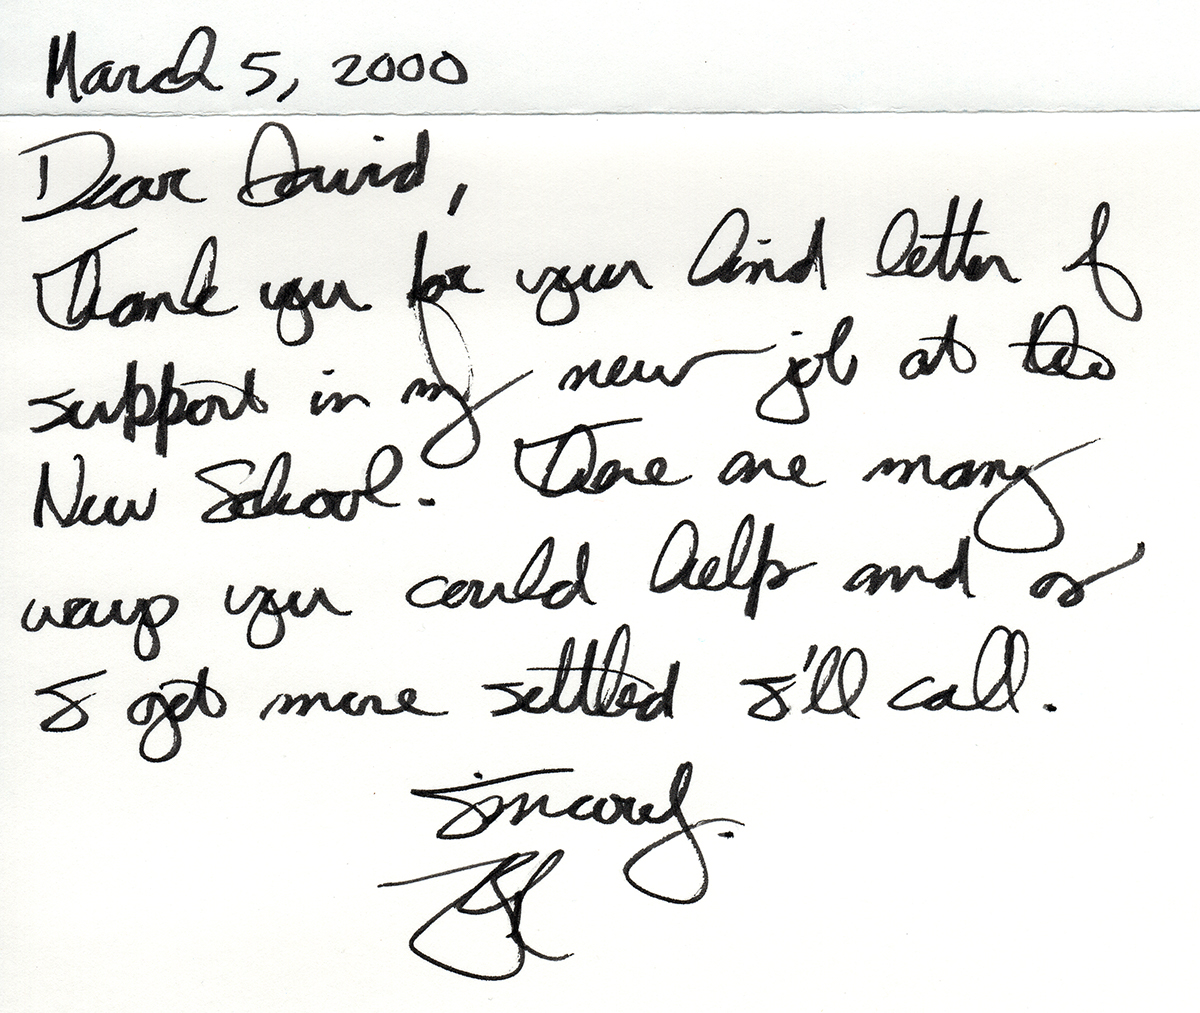 Bob Kerrey Letter, March 5, 2000